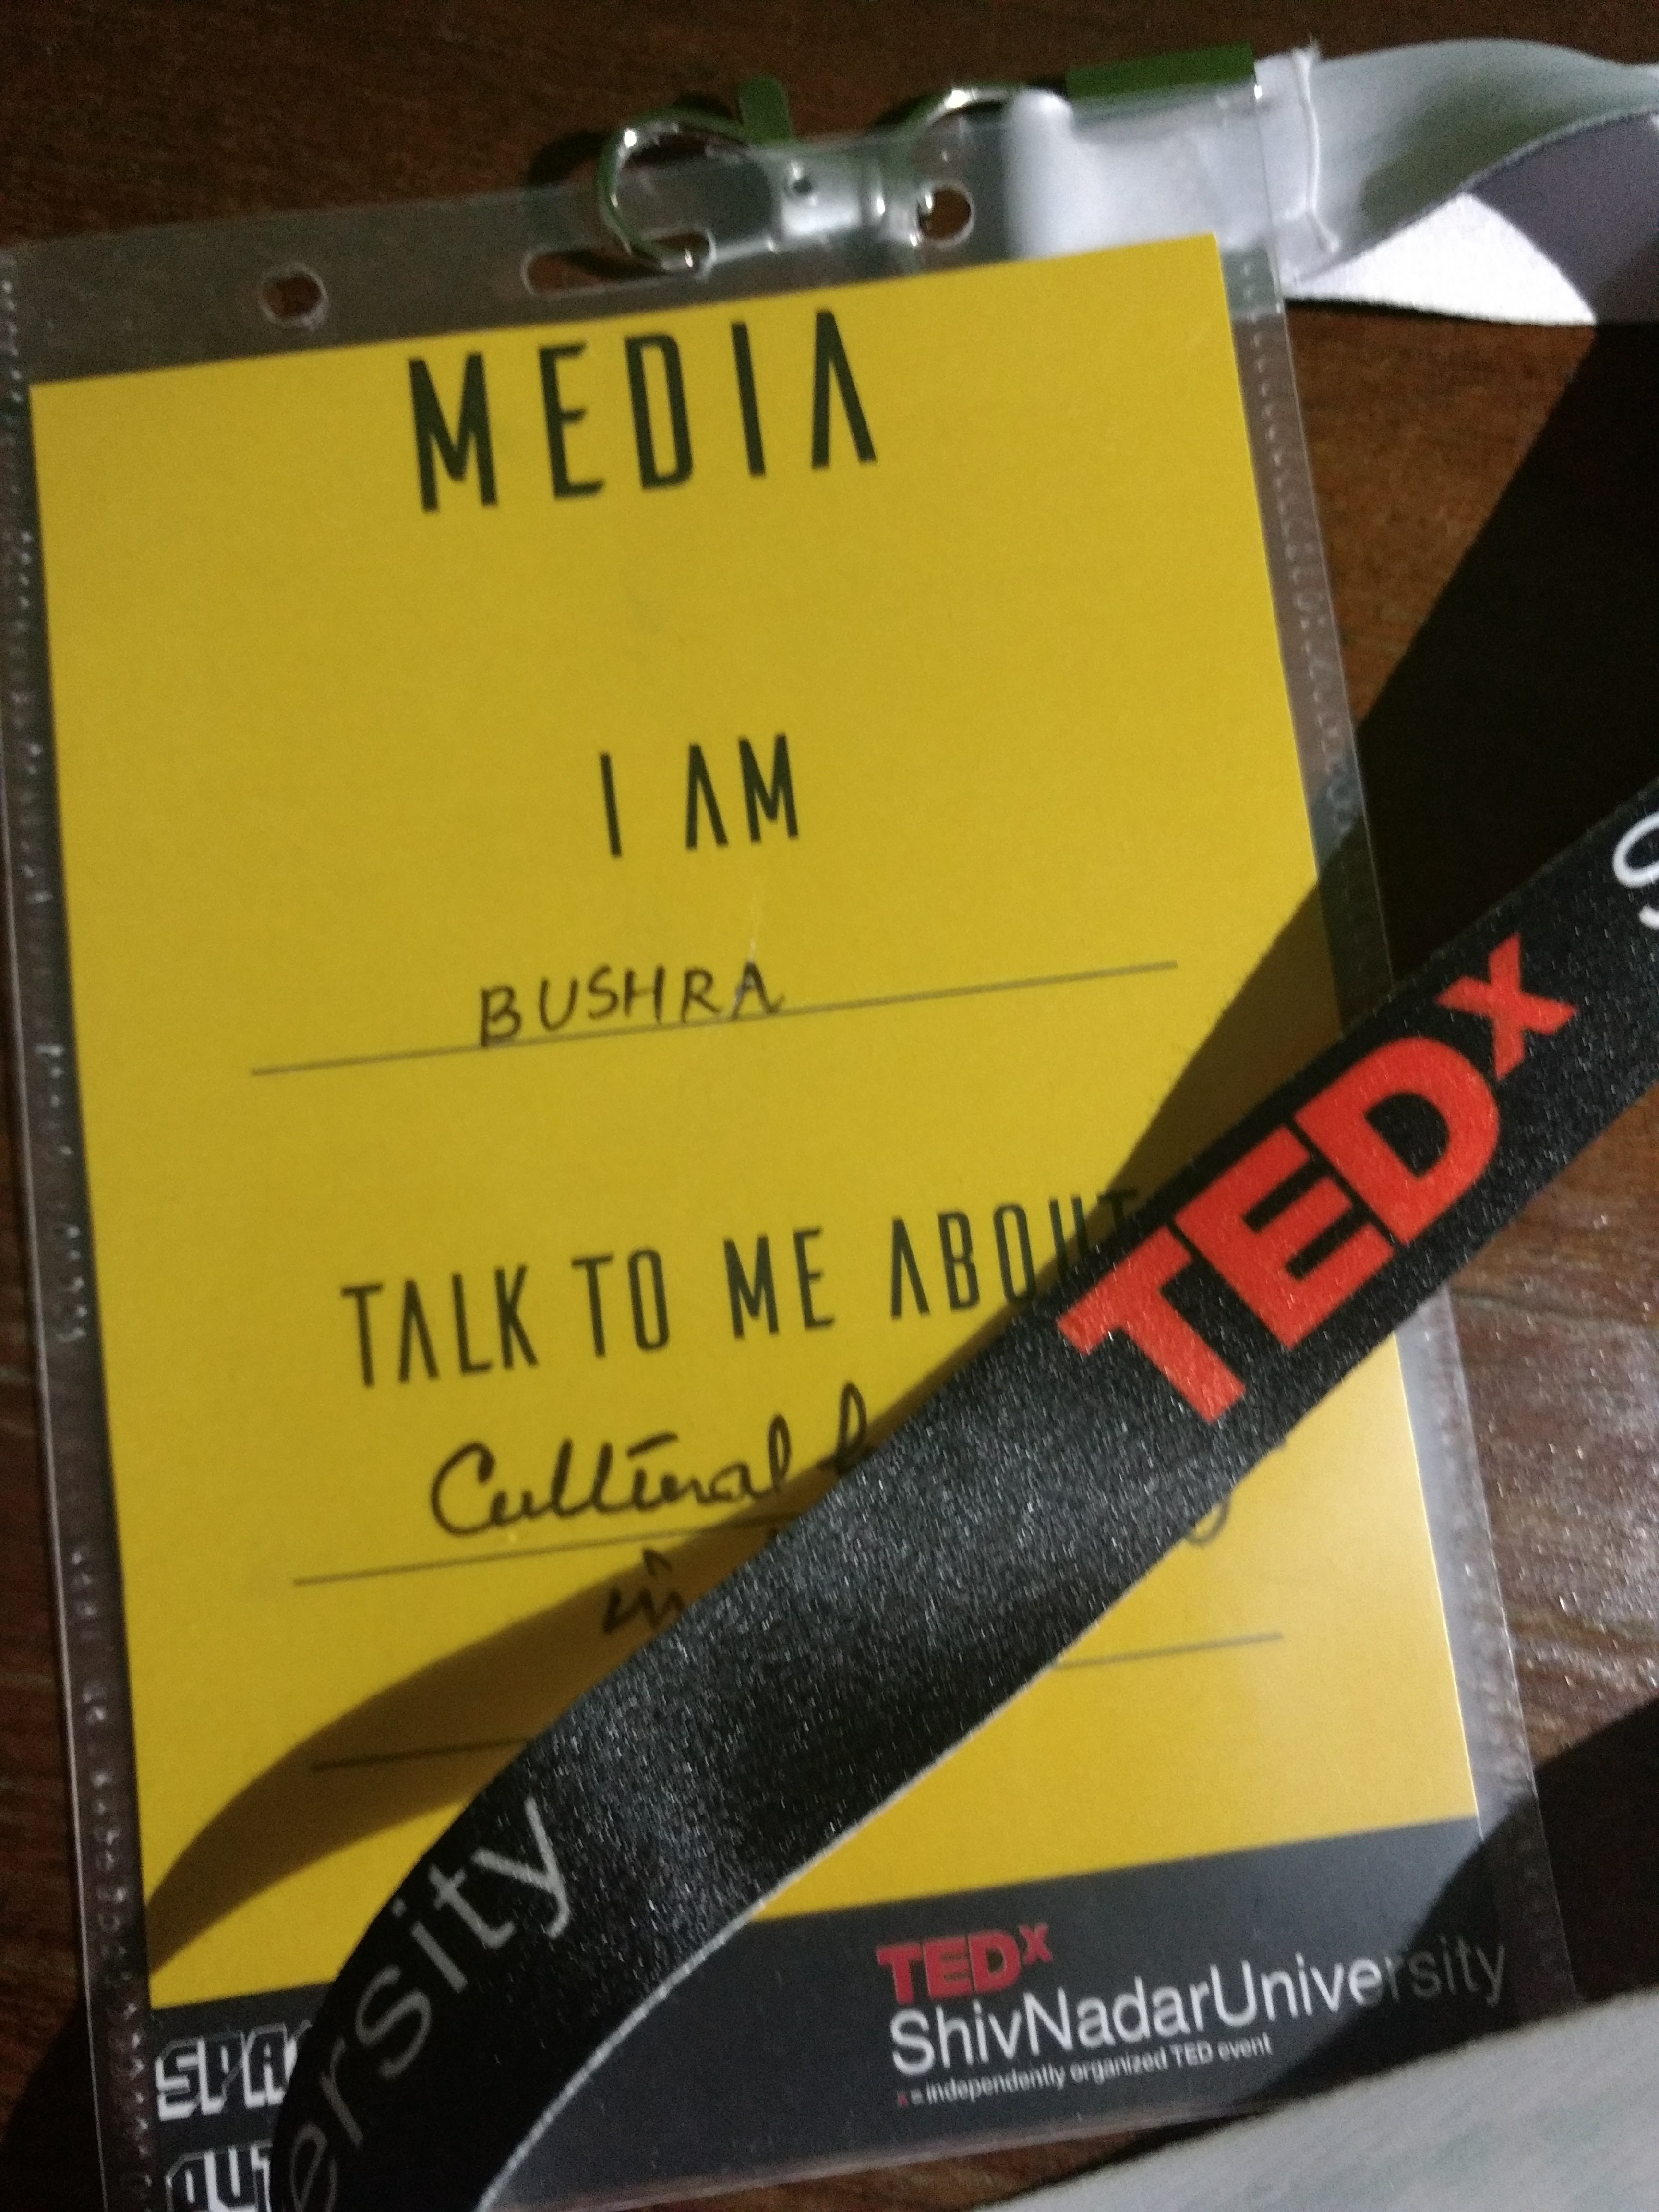 Getting Inspired at TEDx Shiv Nadar University